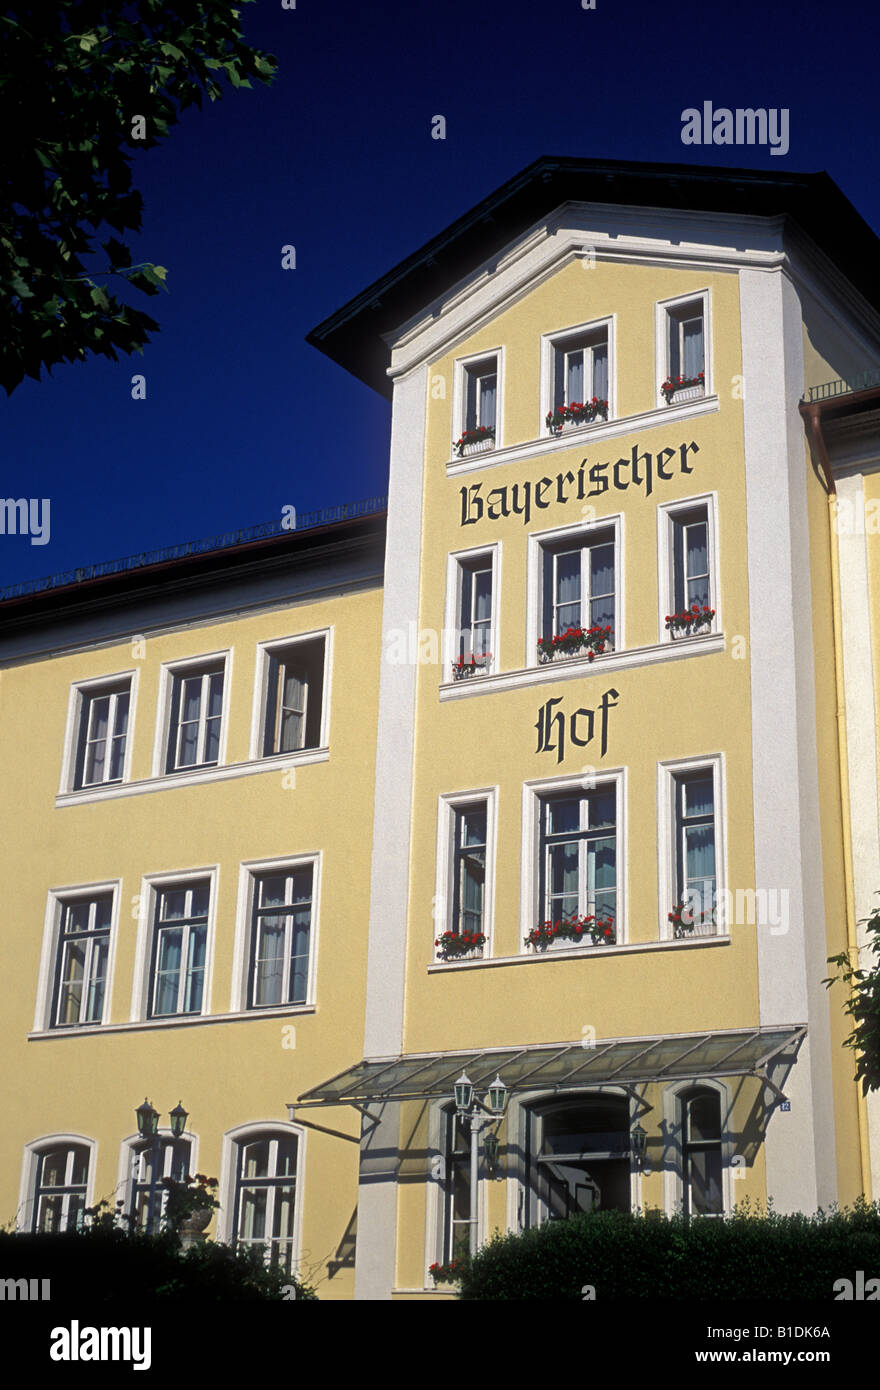 Bayerischer Hof town of Starnberg Bavaria Germany Europe Stock Photo